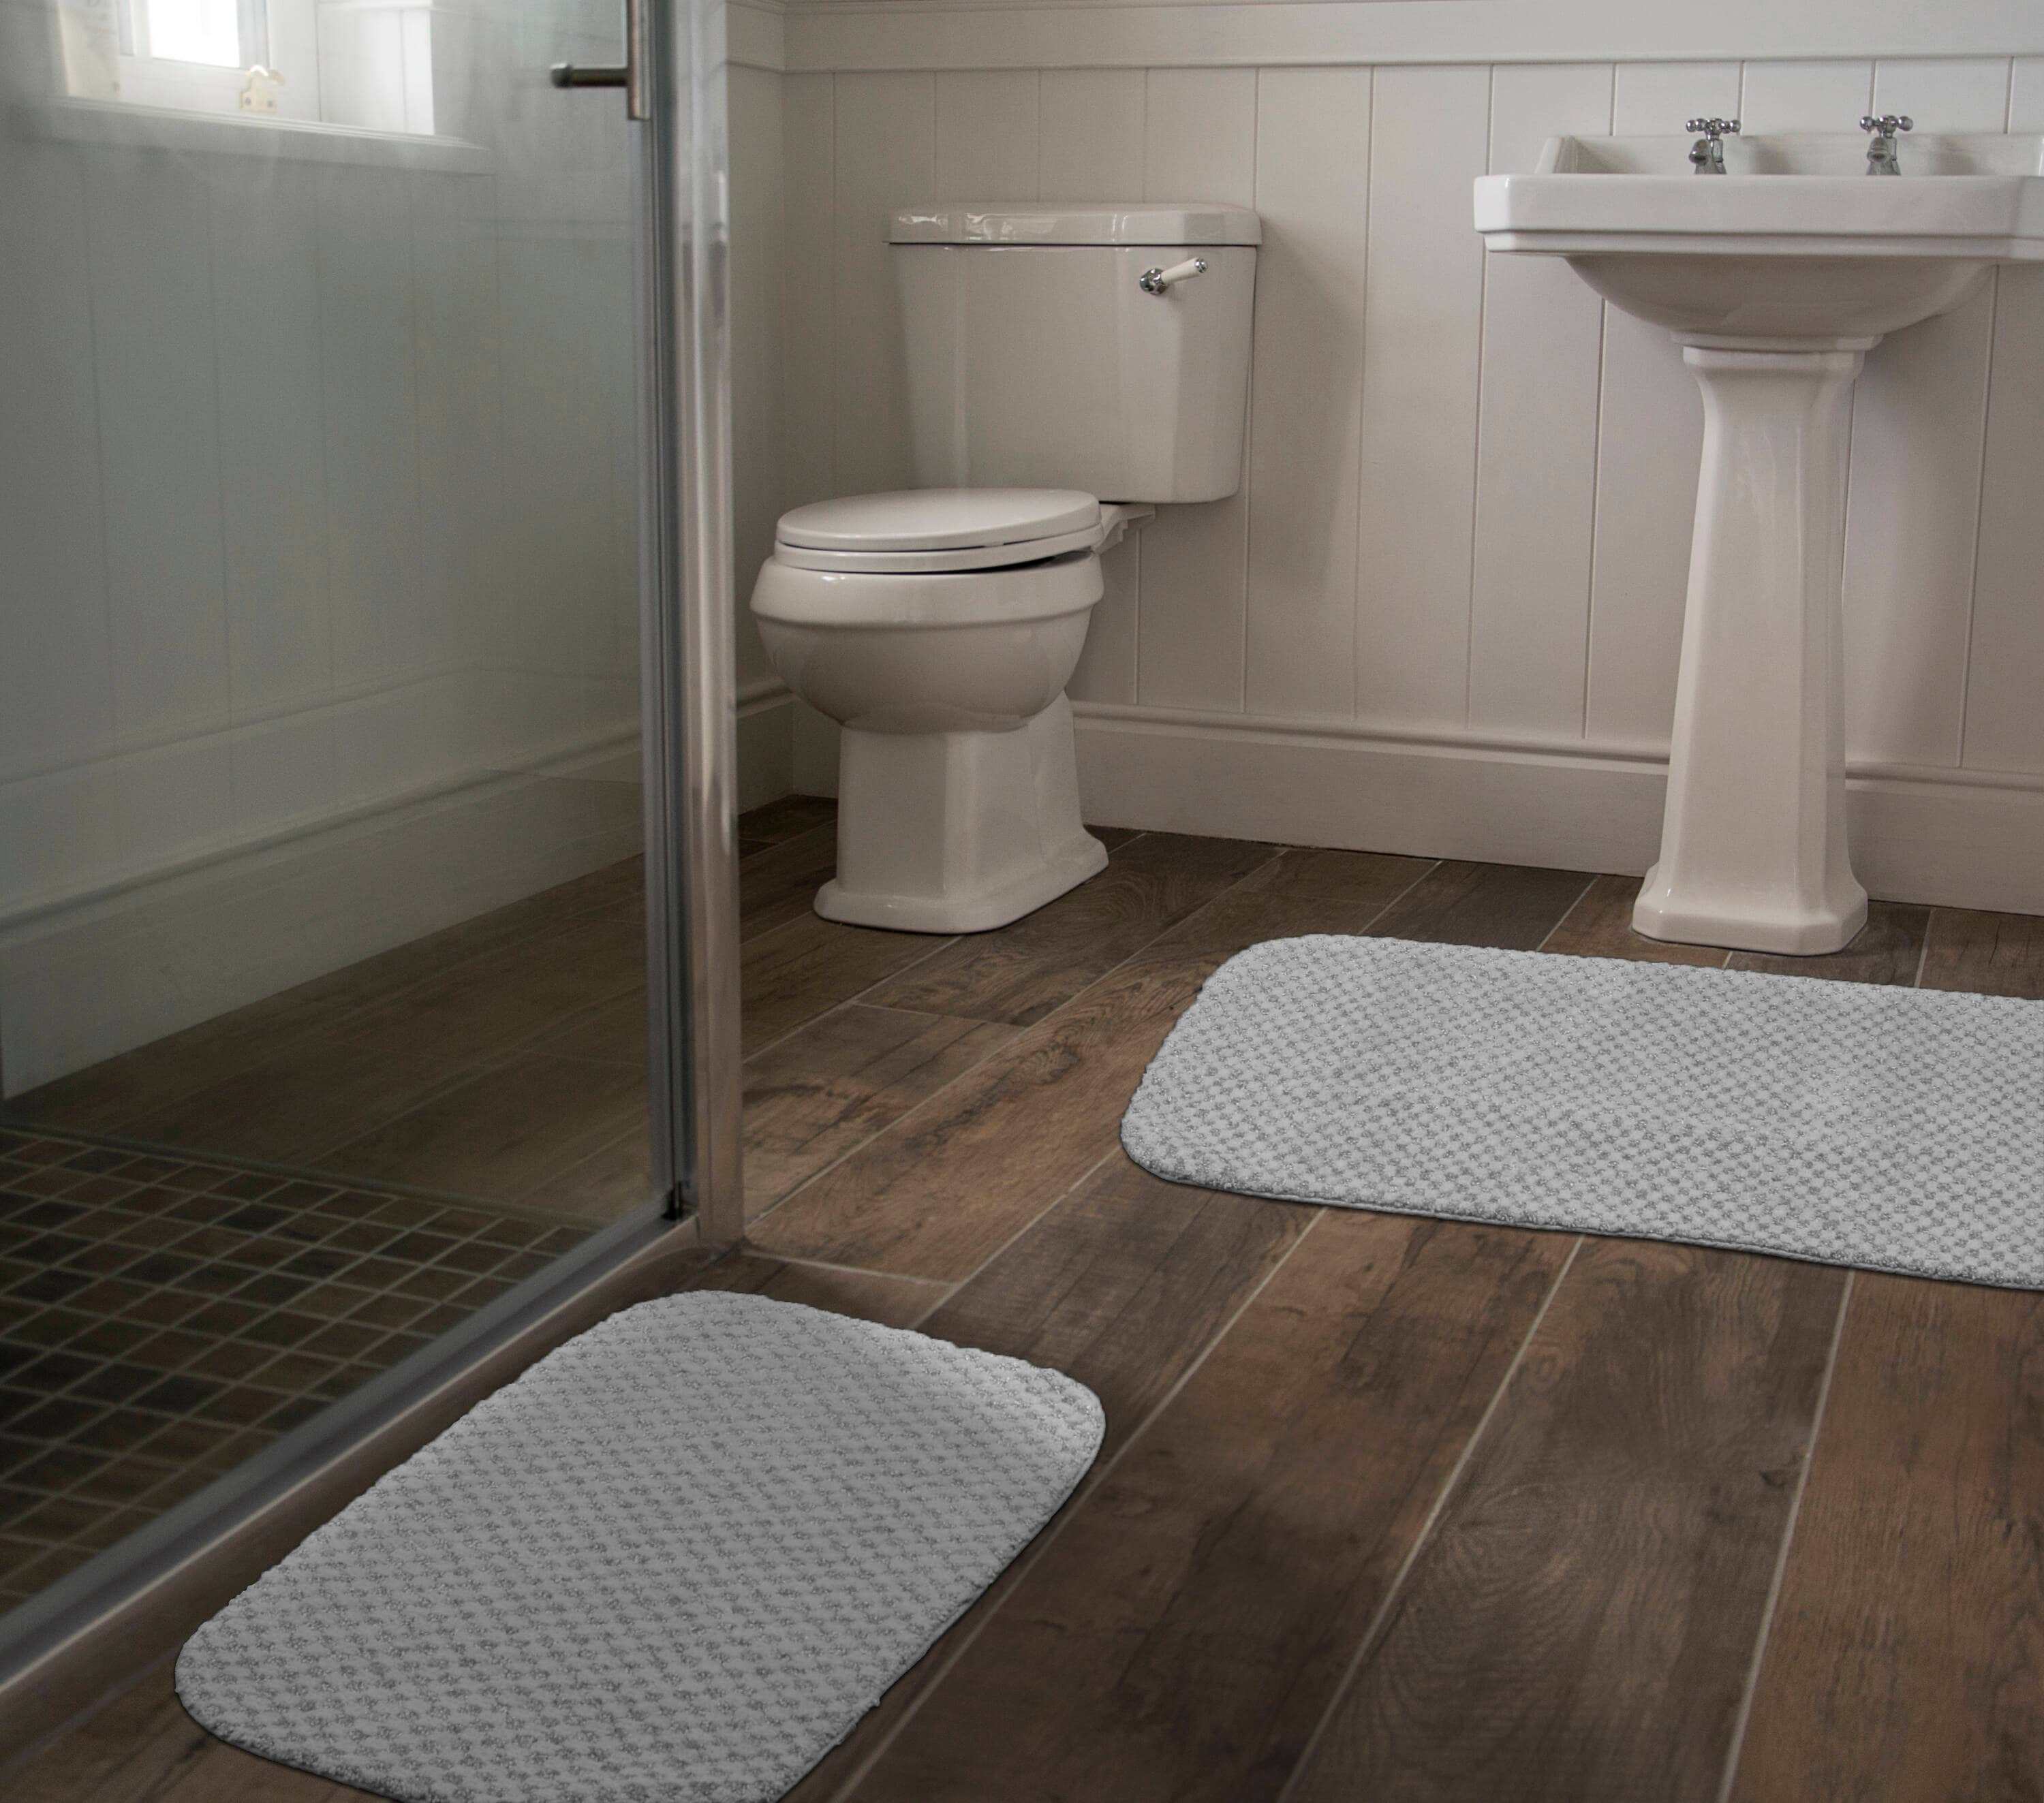 PiccoCasa Absorbent Soft Long Washable Non-Slip Memory Foam Bath Tub Mat  Floor Runner Rug Dark Grey 16 x 47